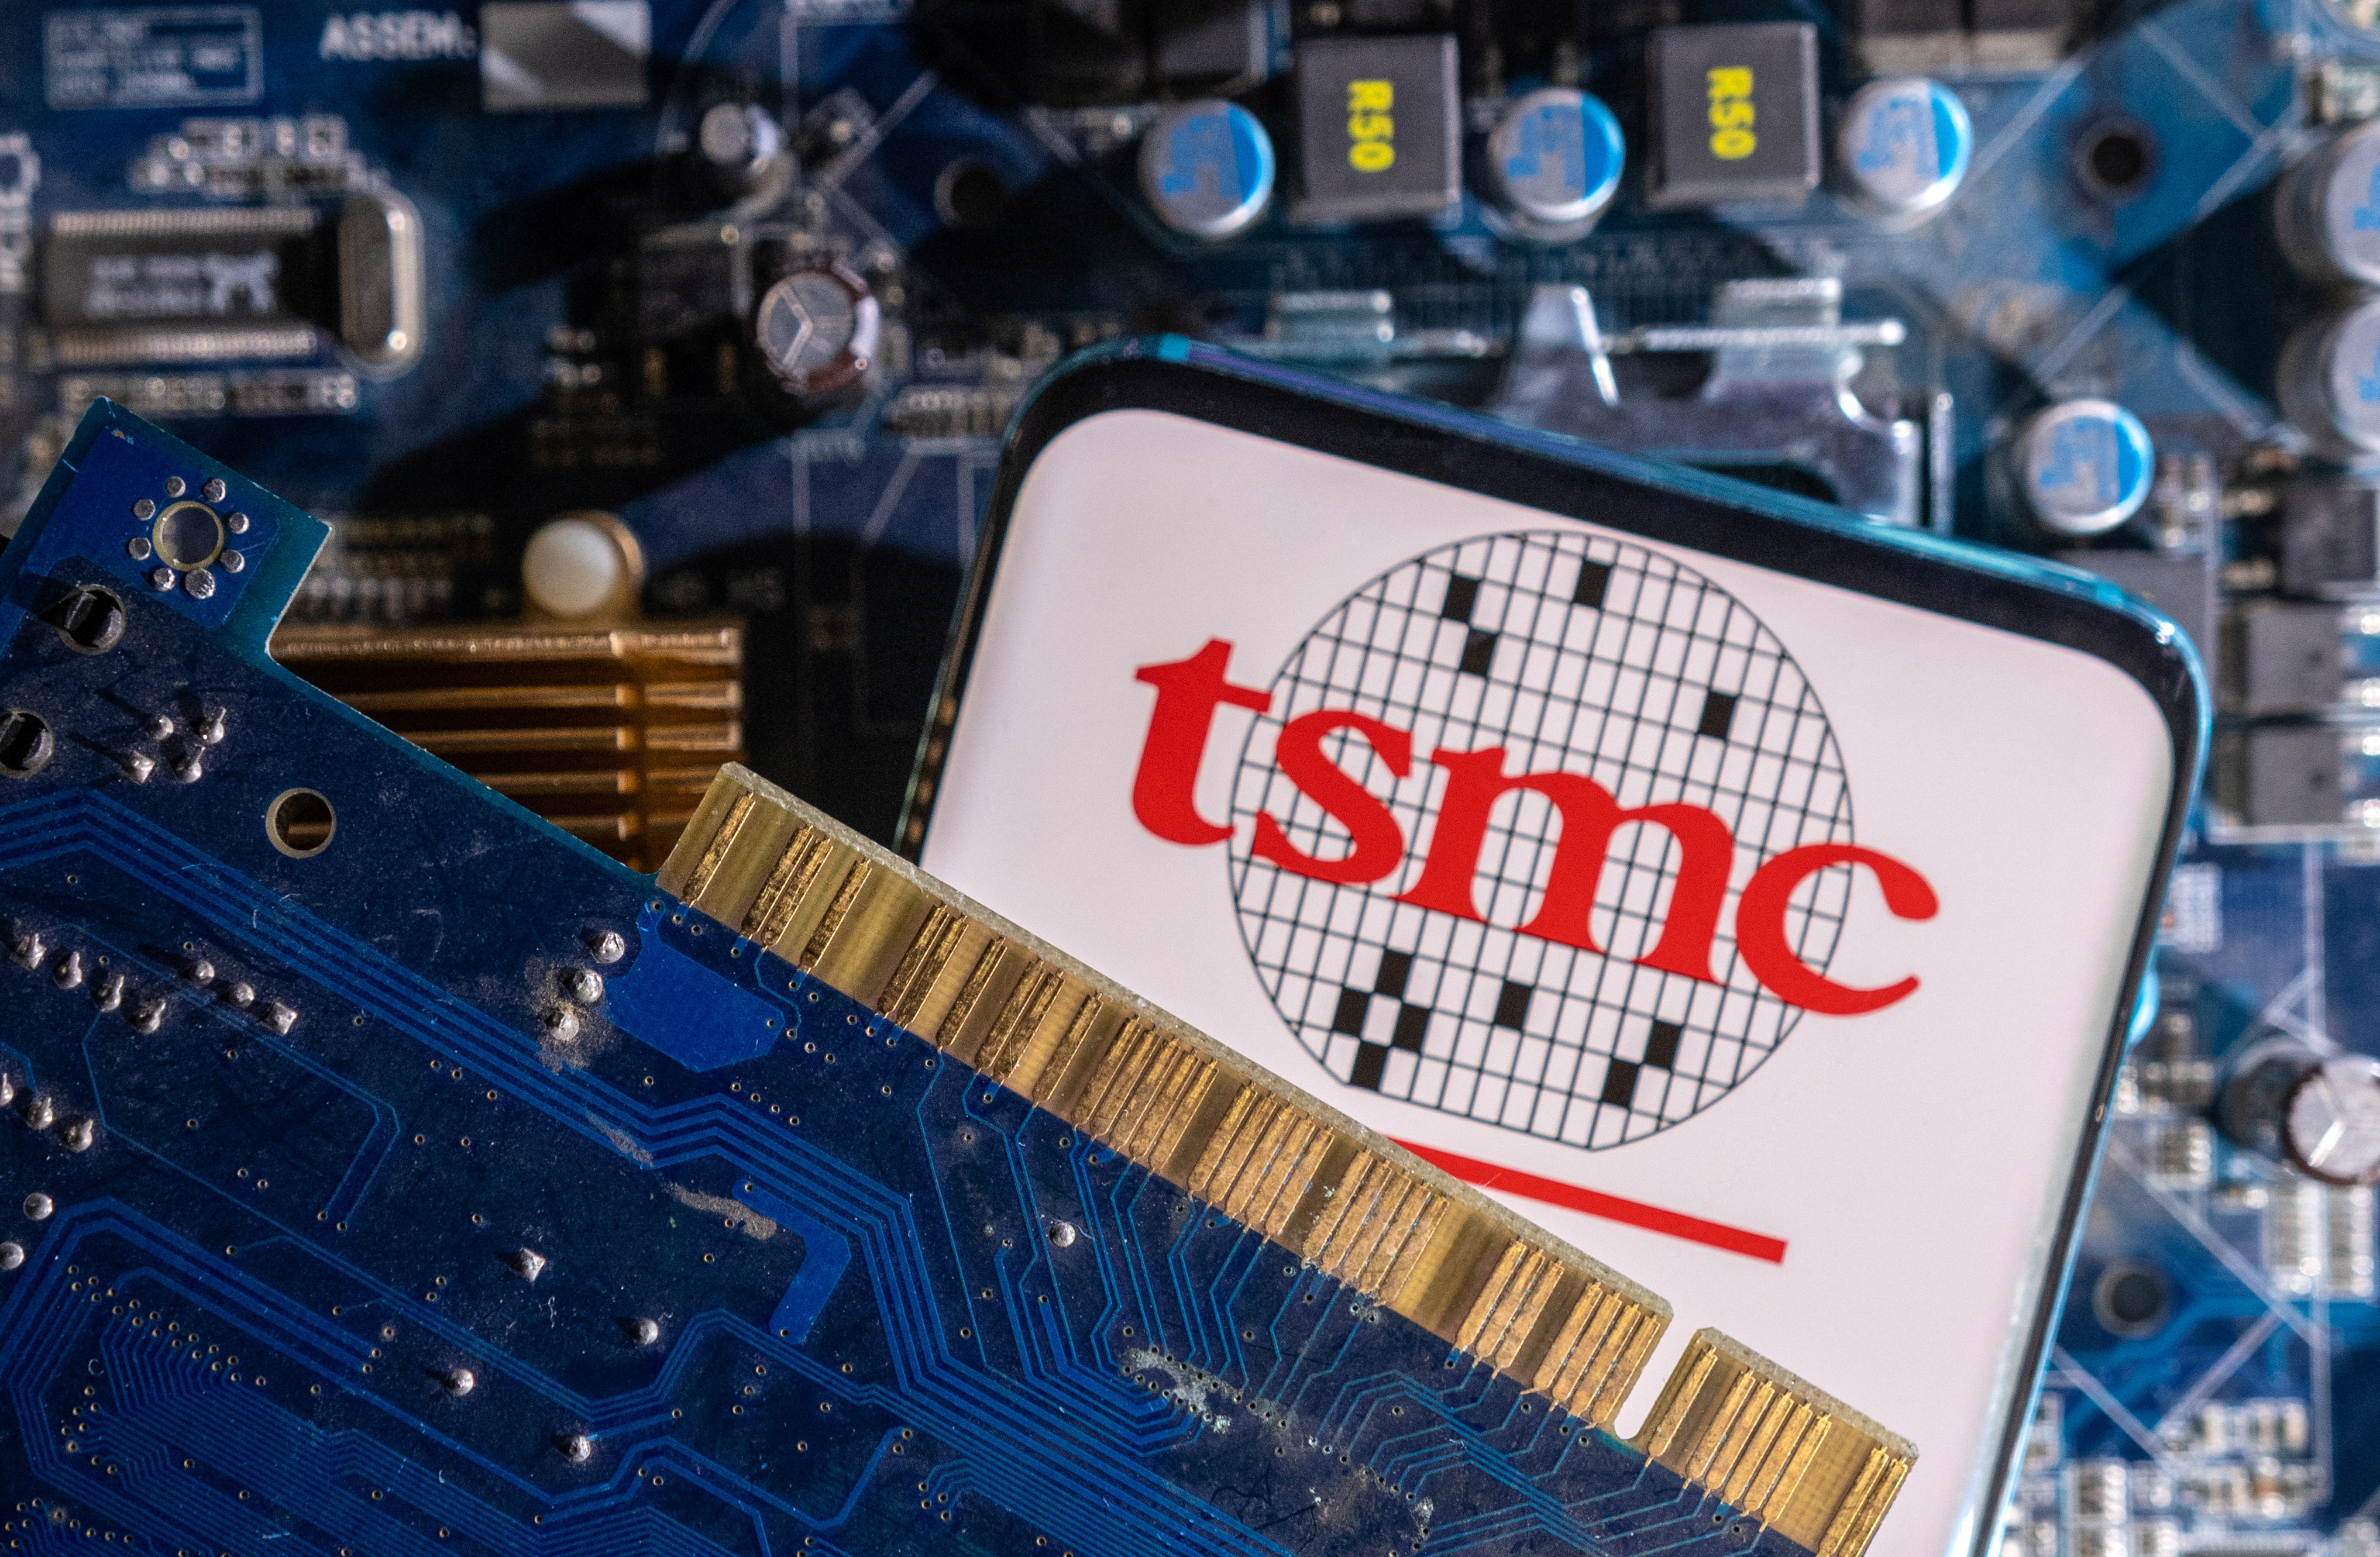 Illustration shows TSMC (Taiwan Semiconductor Manufacturing Company) logo